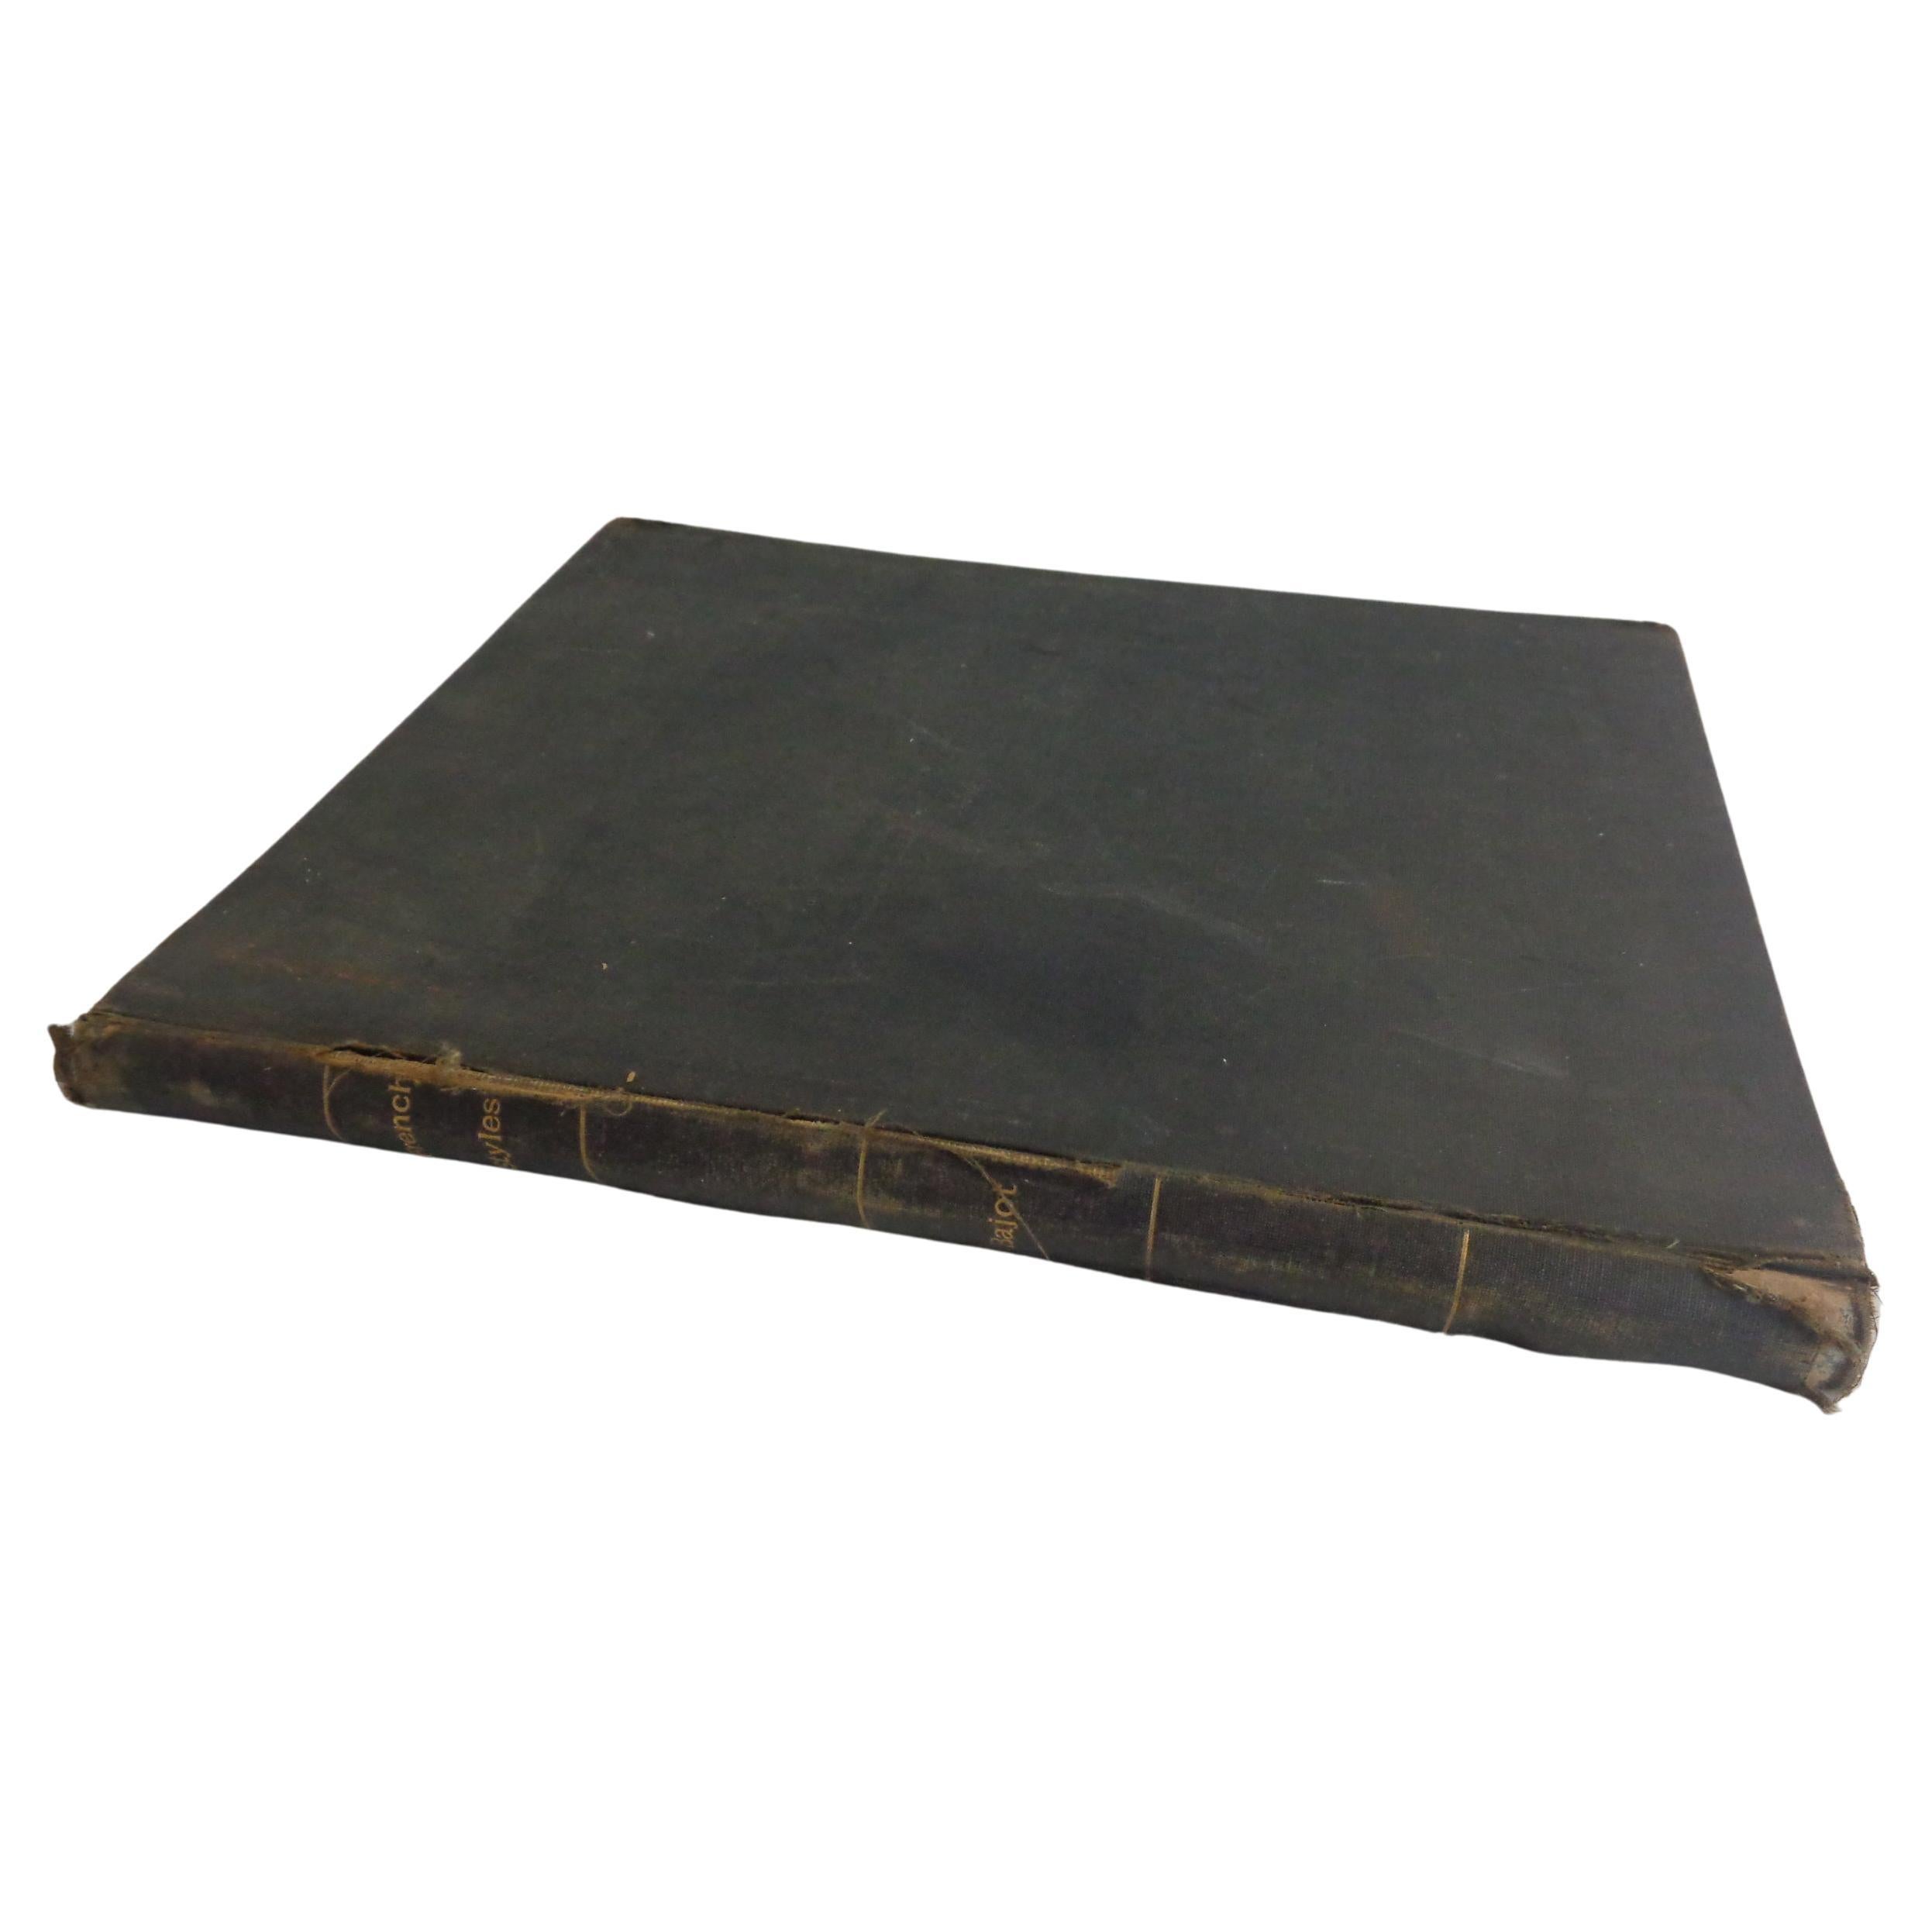  FRENCH STYLES: Furniture & Architecture - Bajot, Paris - 19th C. Folio Book For Sale